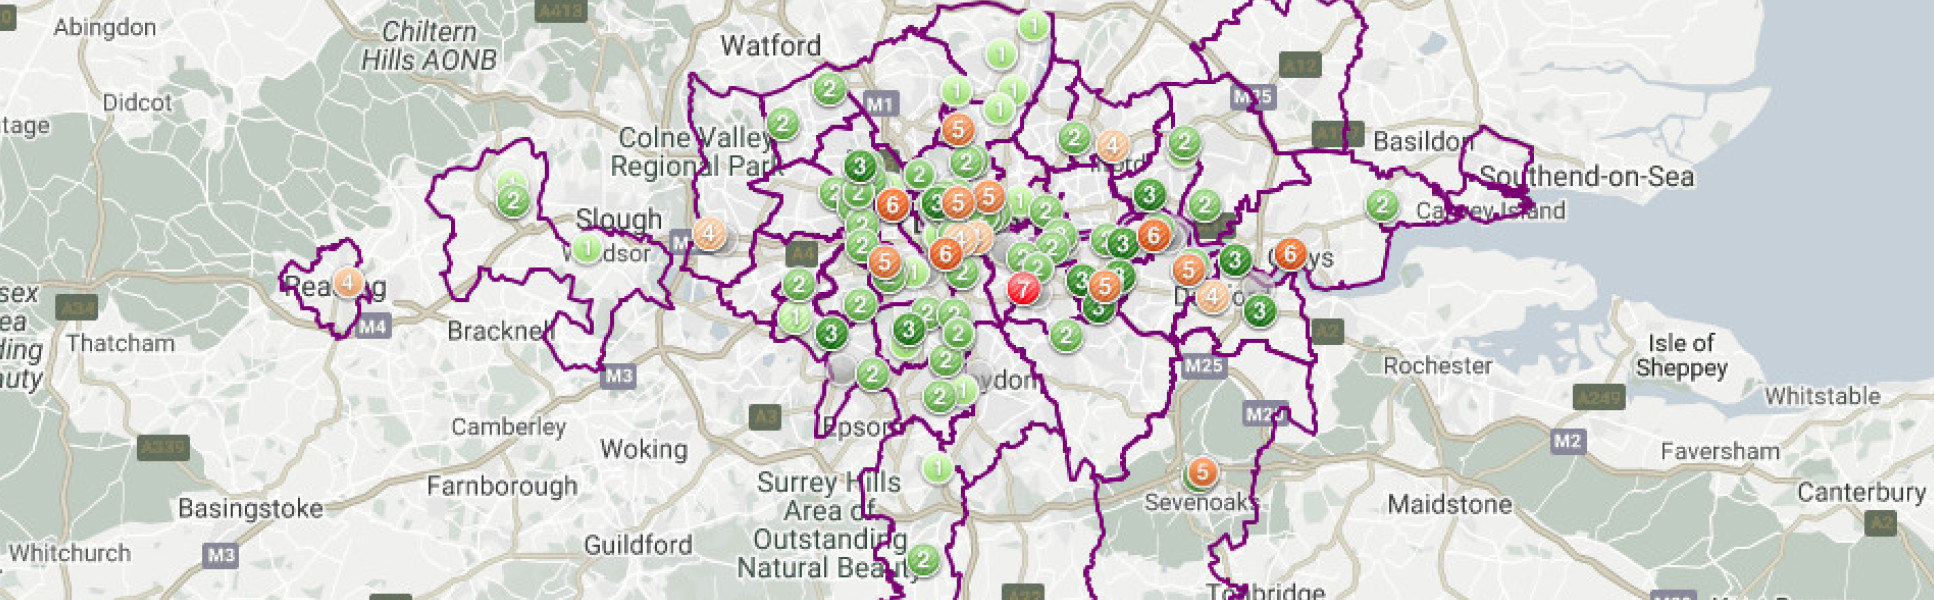 Measurement of pollution across London